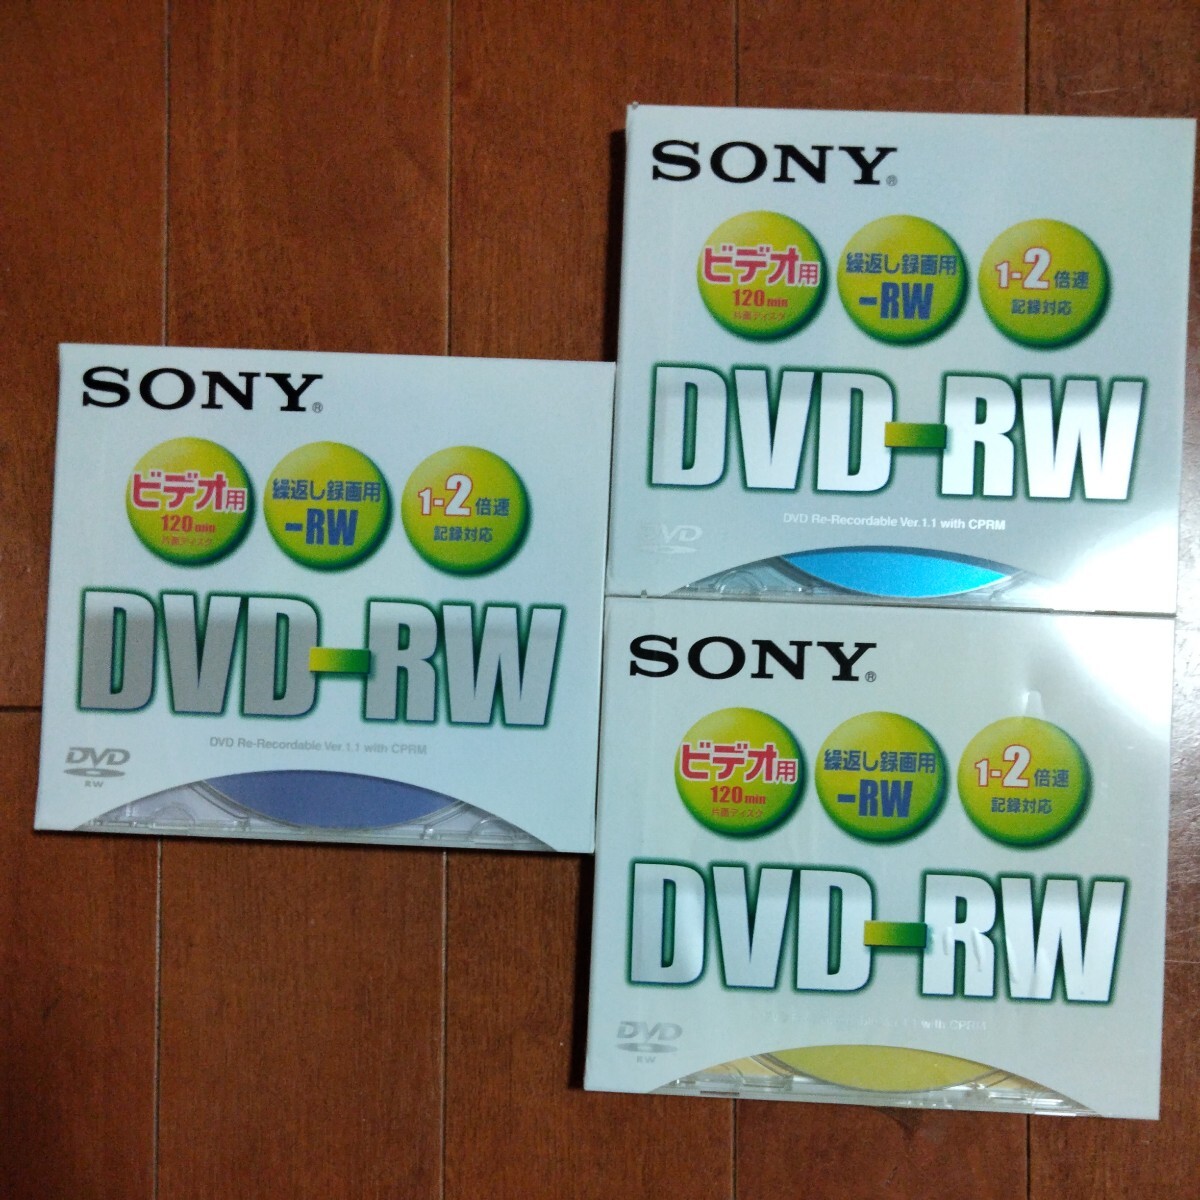 DVD-RW CPRM соответствует 13 листов.. внутри перевод FujiFilm DVD-RW 10 листов упаковка CPRM соответствует,SONY DVD-RW 3 листов CPRM соответствует 